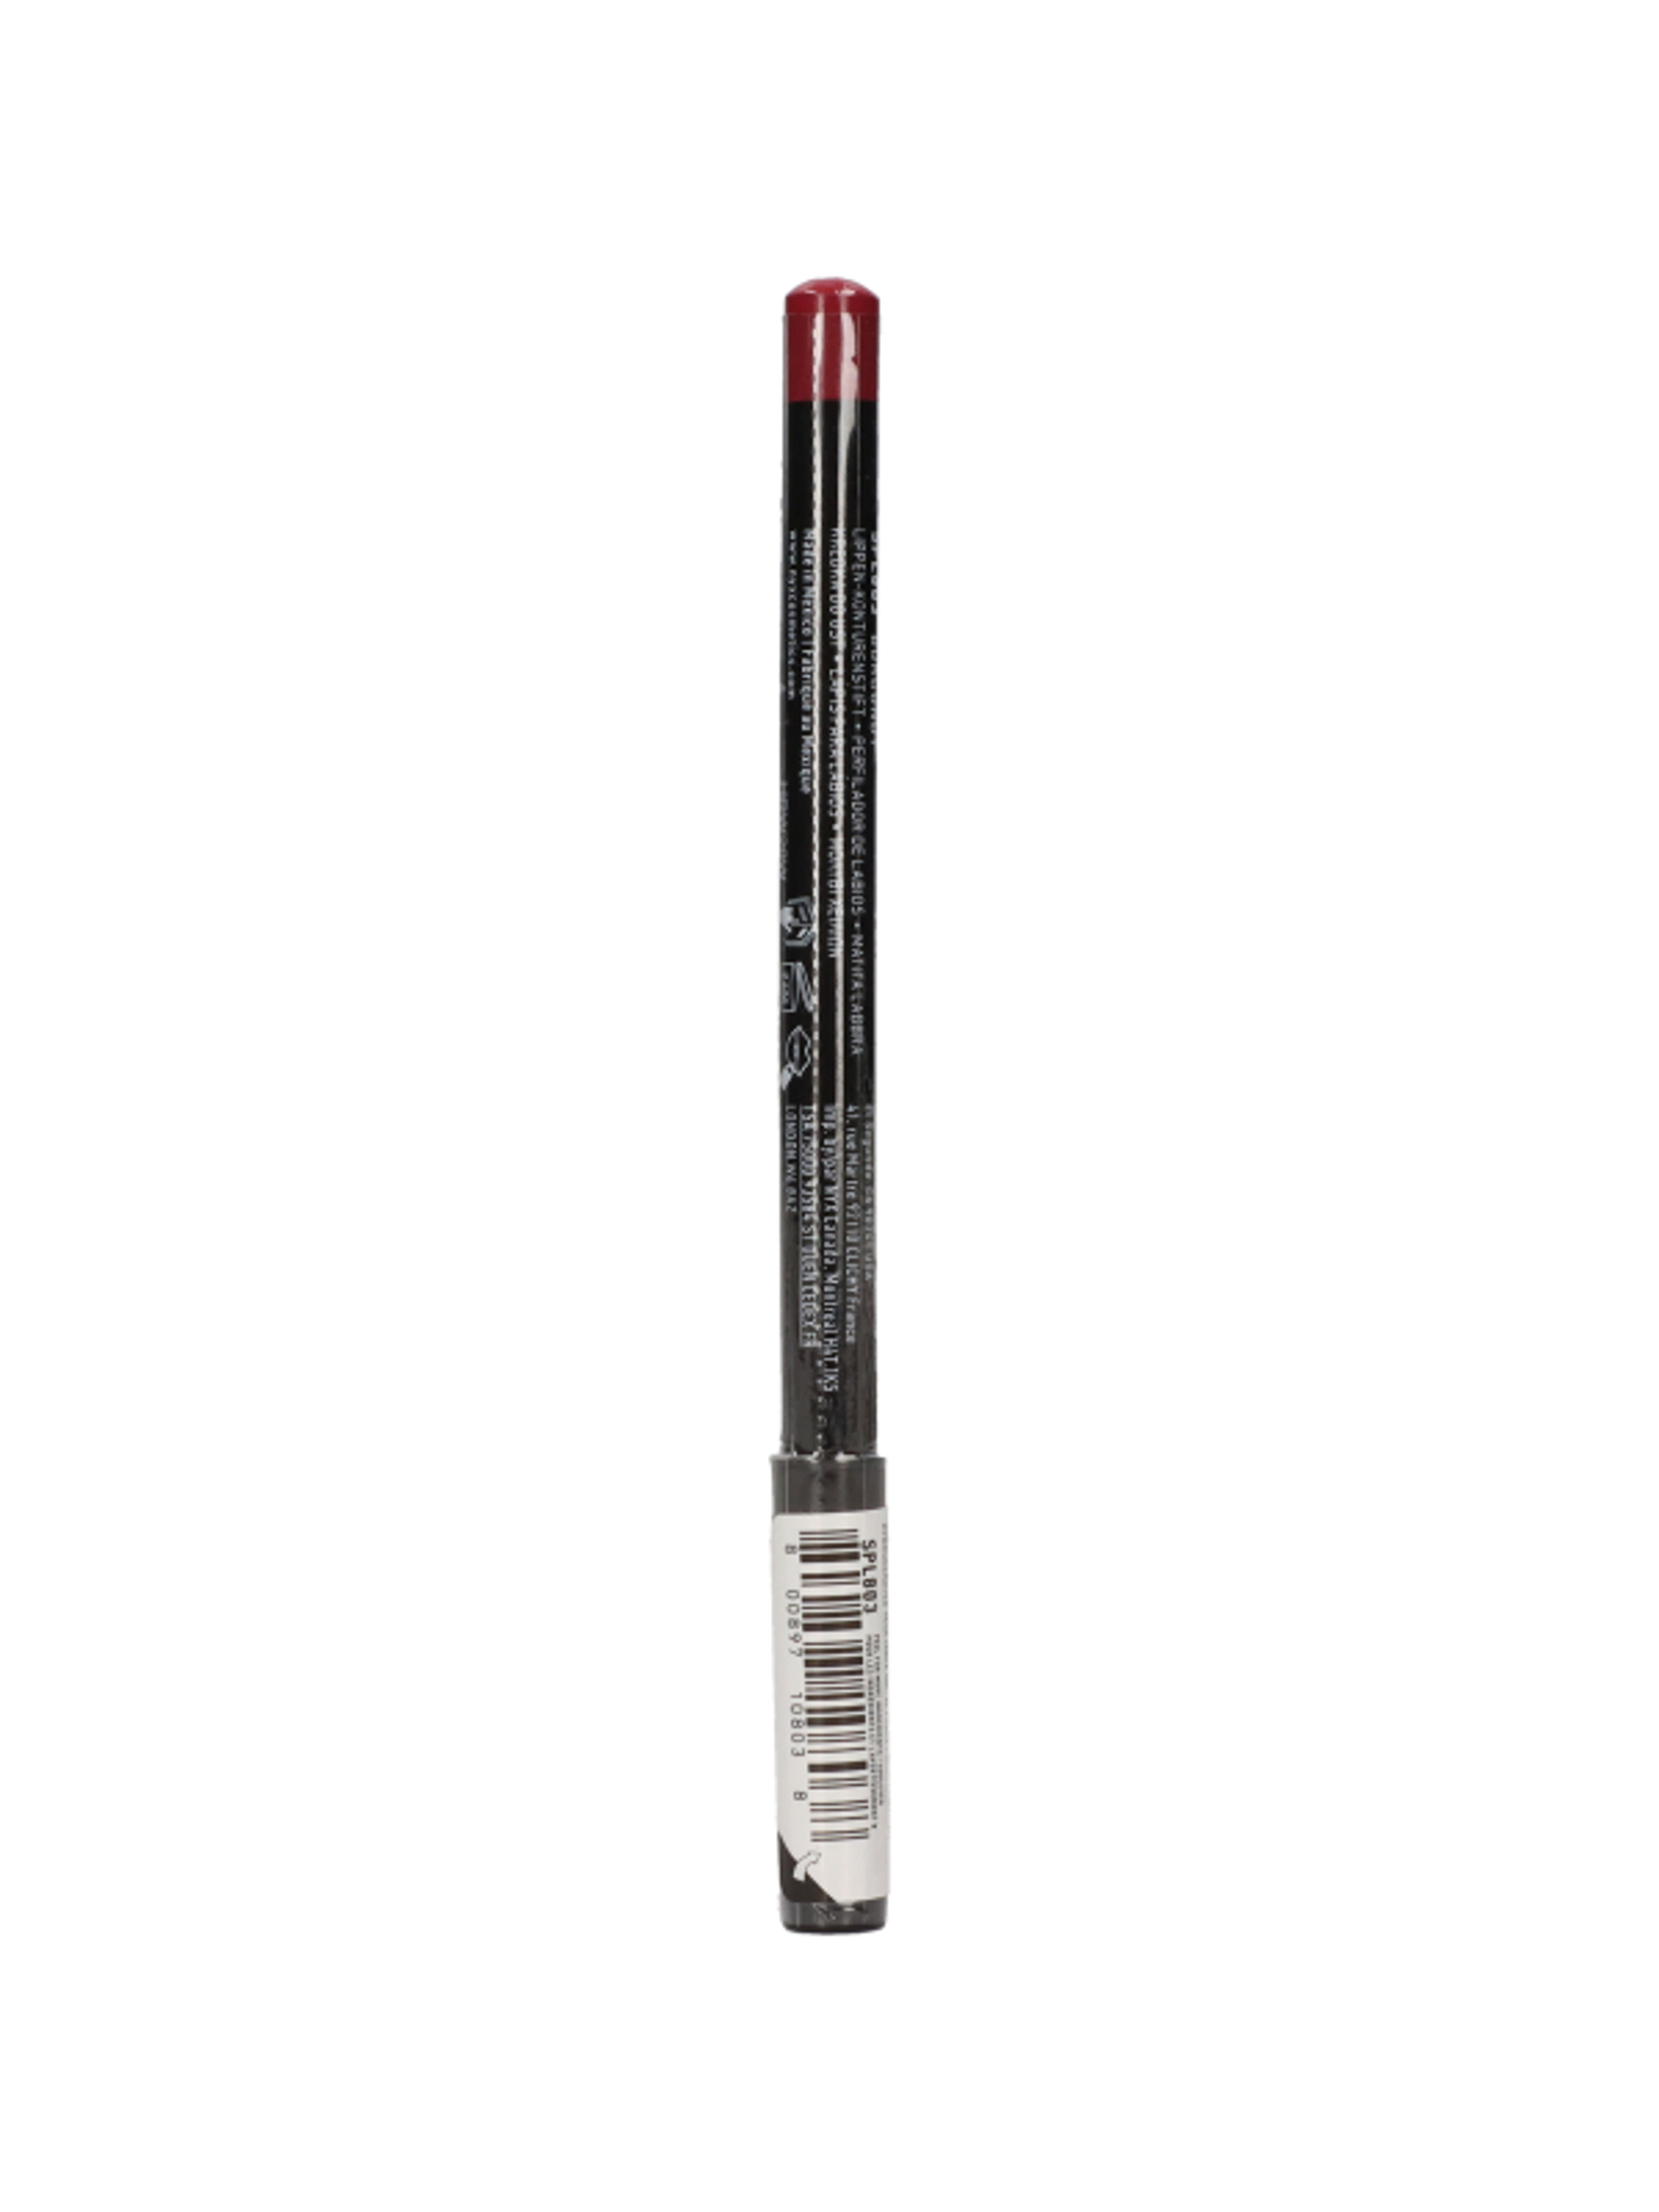 NYX Professional Makeup Slim Lip Pencil ajakkontúr ceruza, Burgundy - 1 db-5